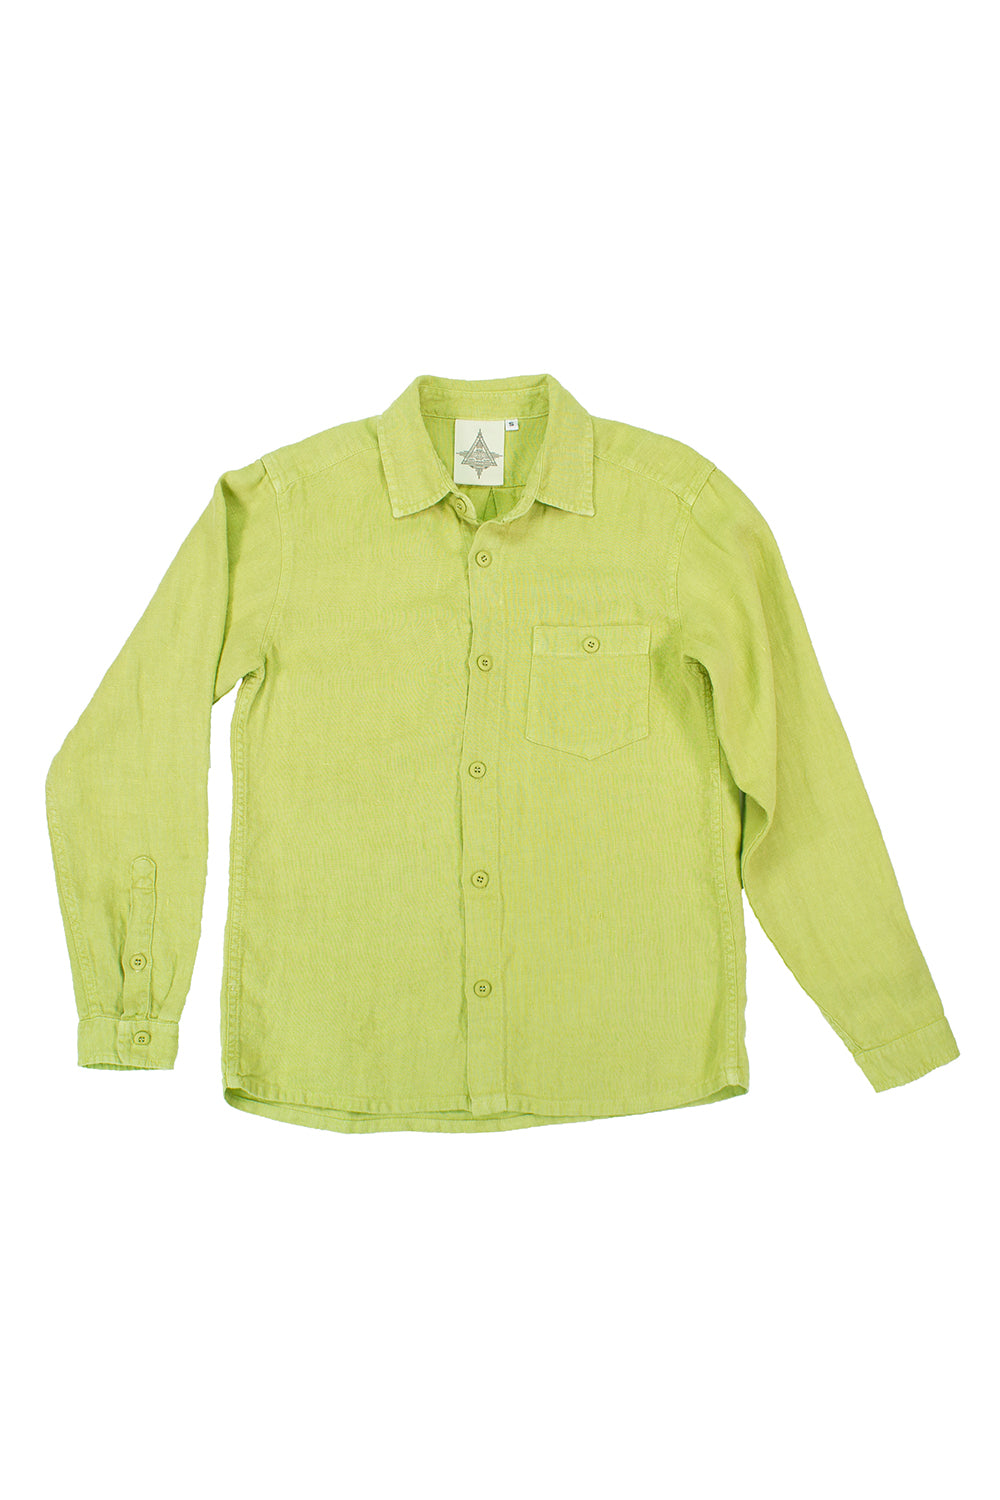 Lassen 100% Hemp Shirt - Sale Colors | Jungmaven Hemp Clothing ...